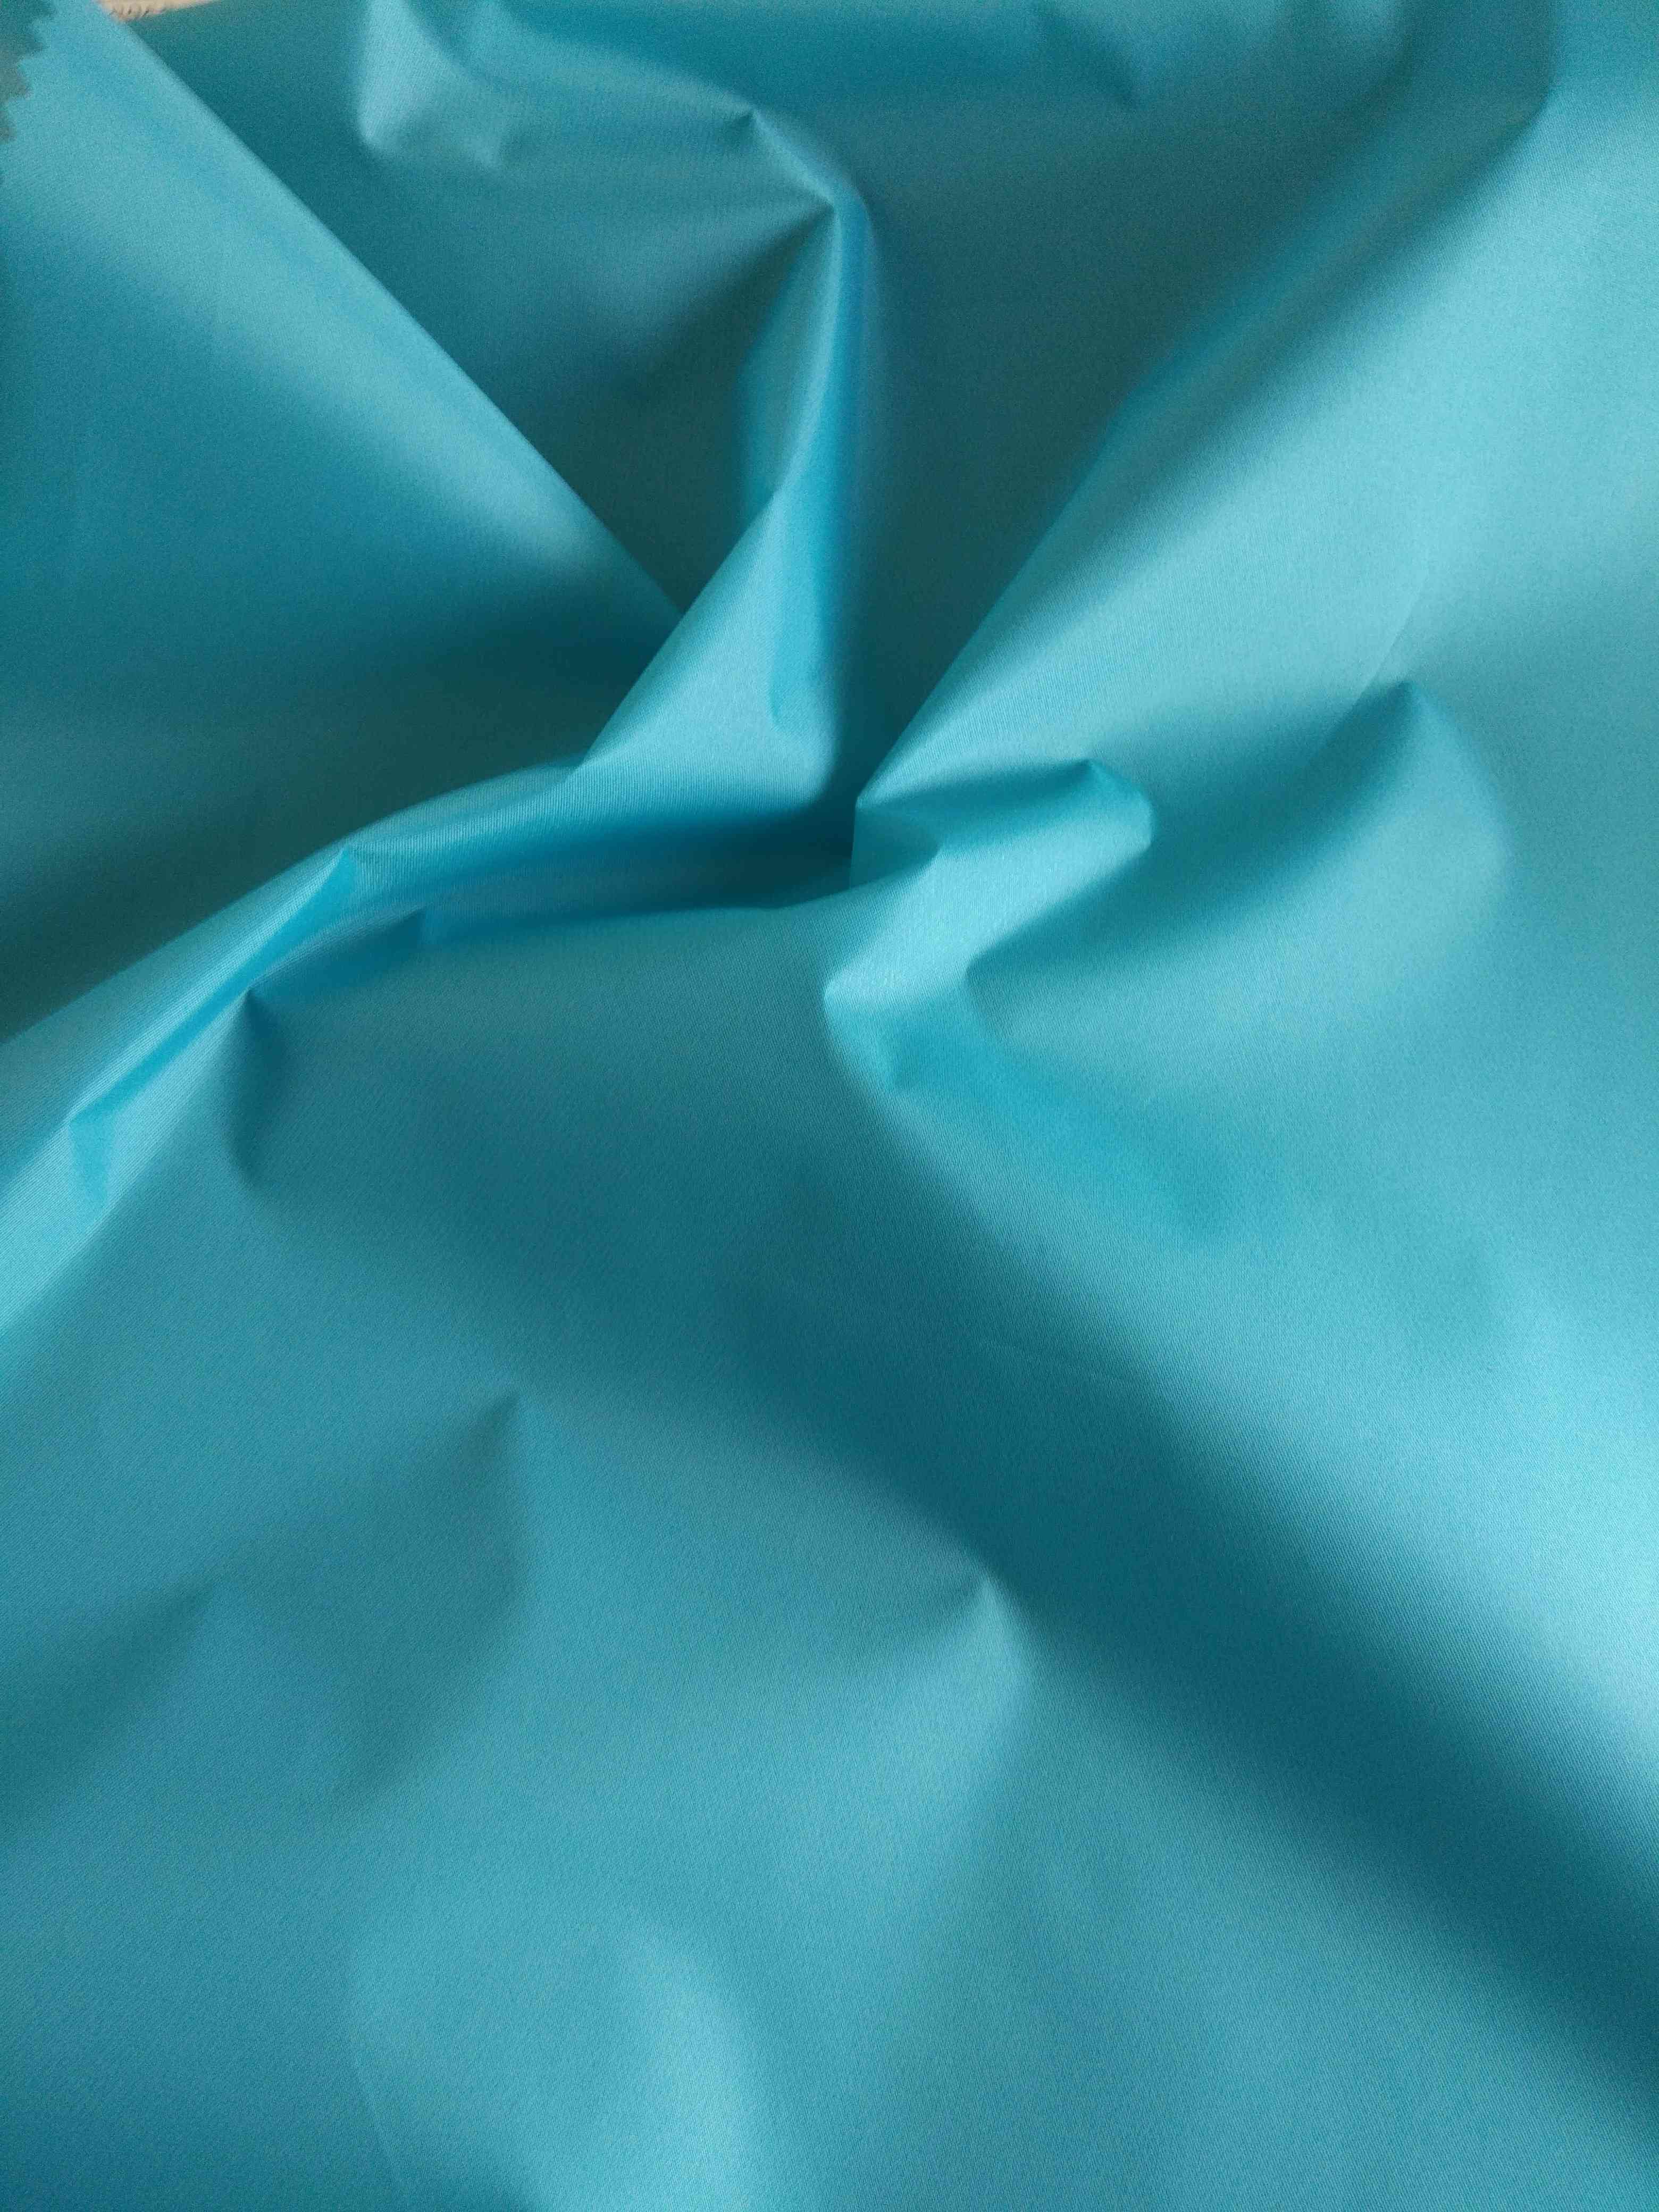 210T Taffeta Polyester Fabric With PA Coating Finish